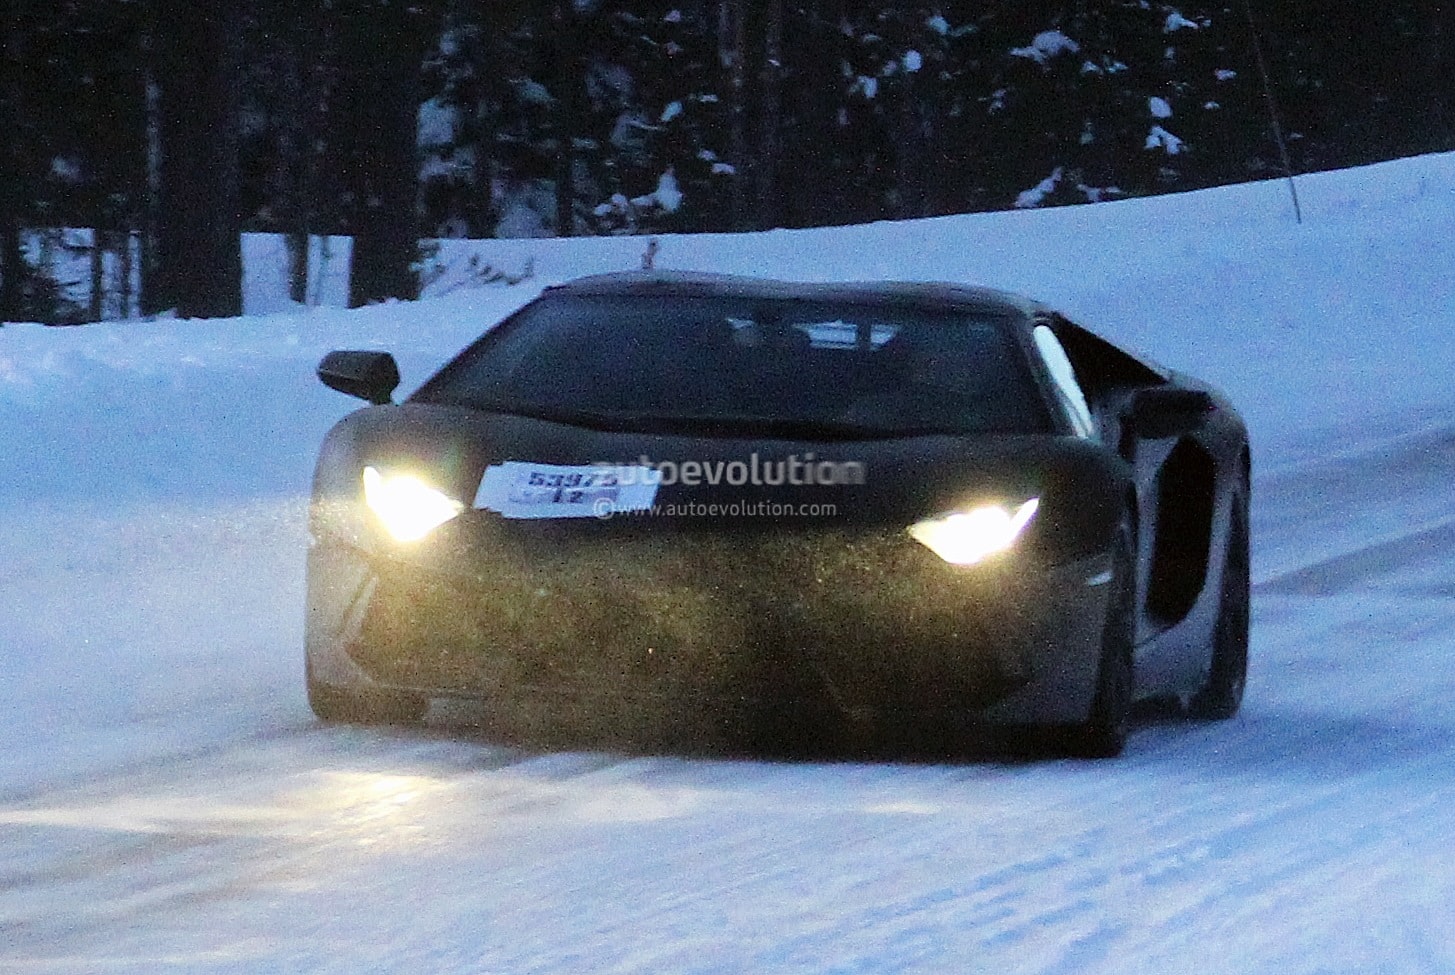 Lamborghini Anventador Roadster seen in Northern Sweden